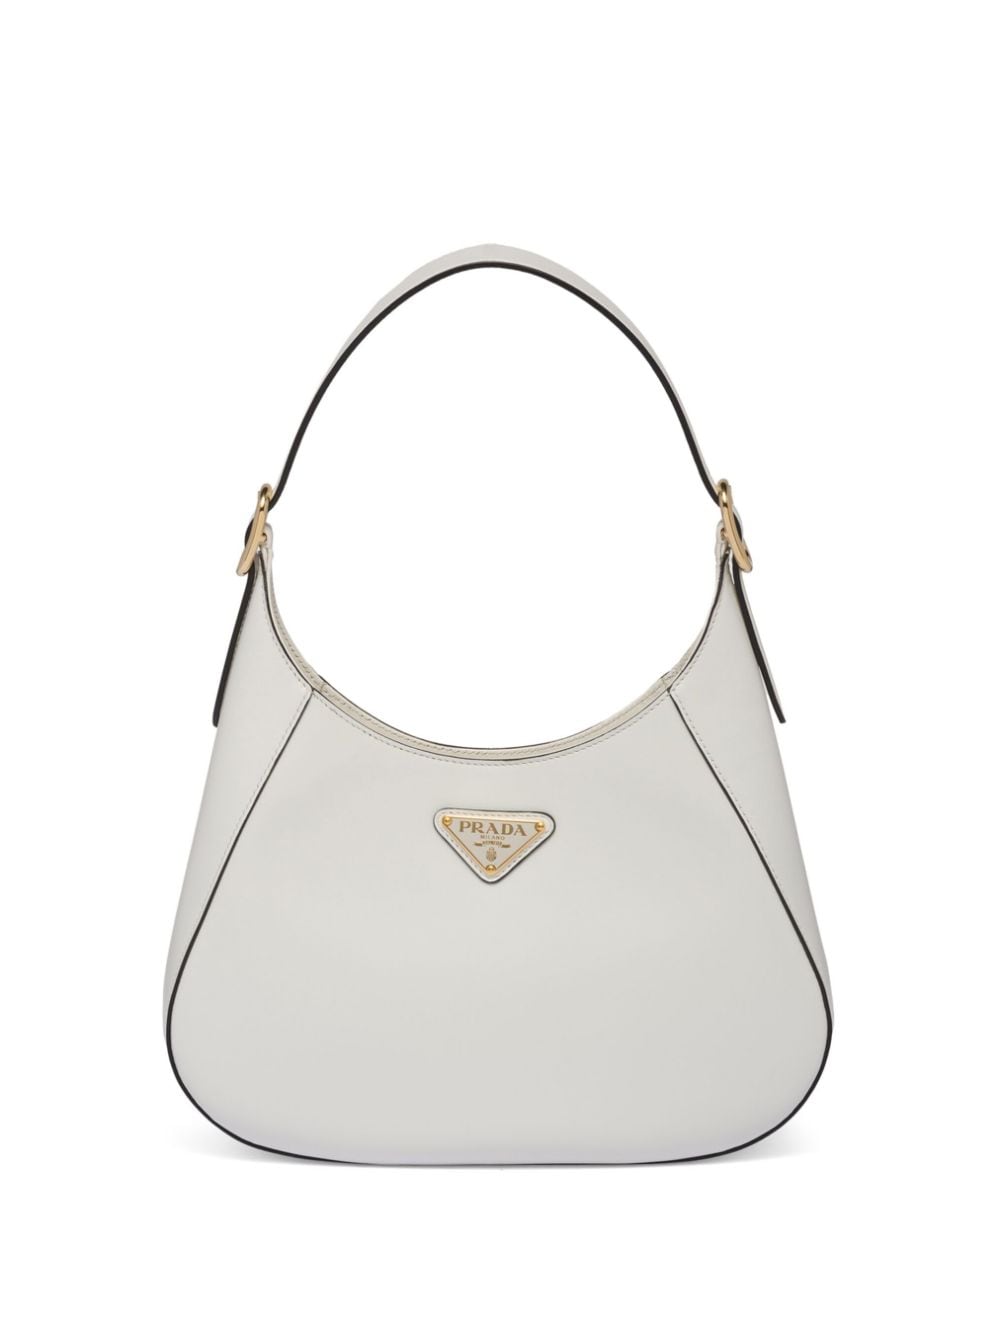 Prada leather shoulder bag - White von Prada